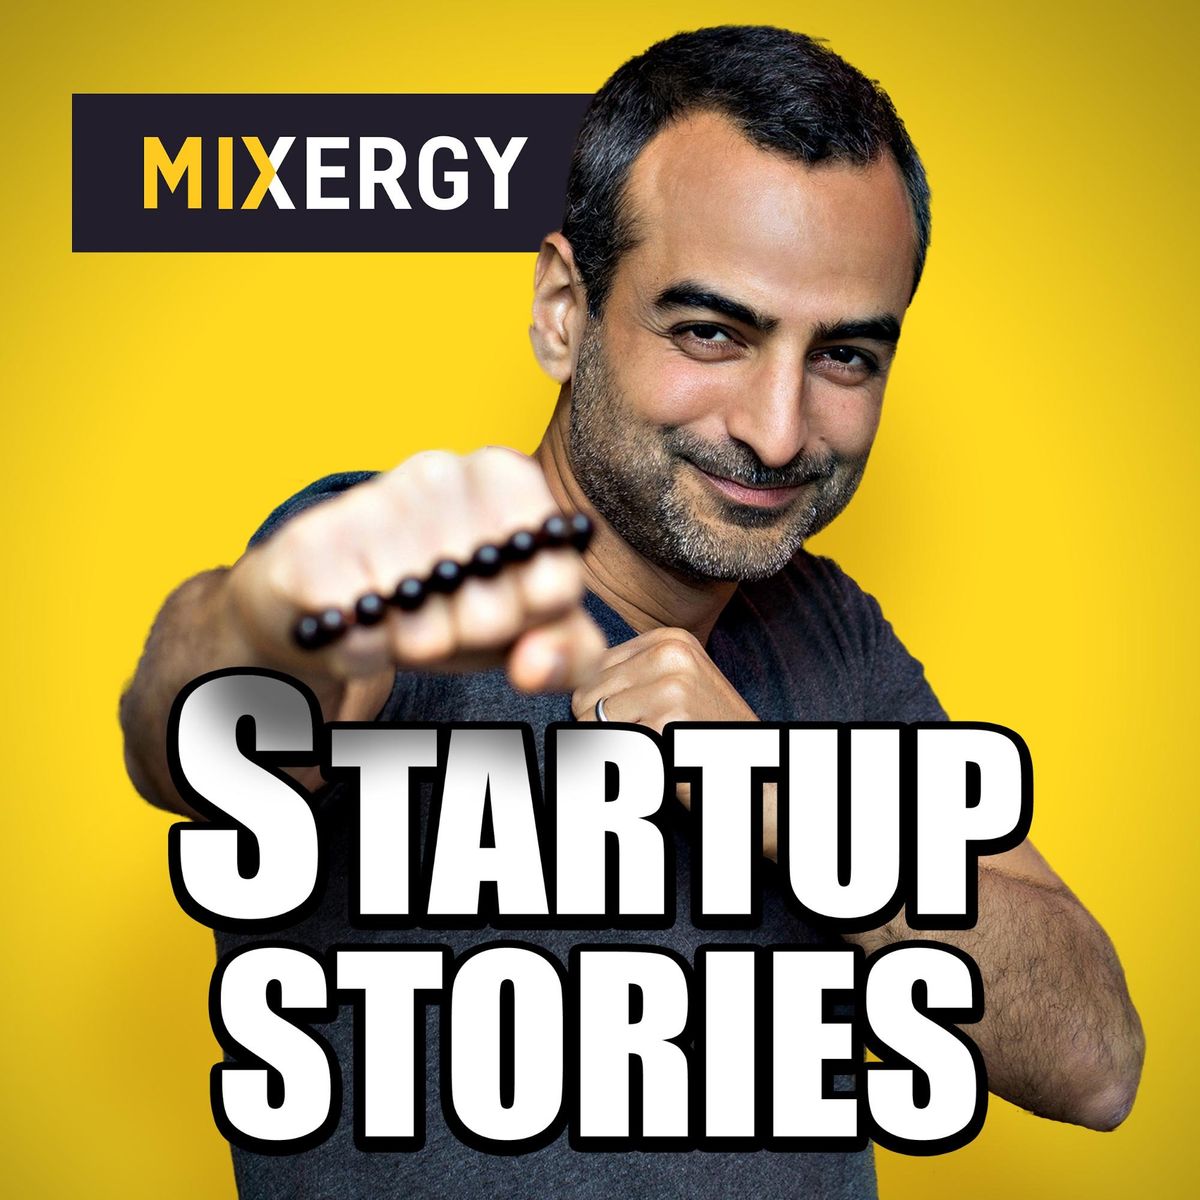 Startup Stories